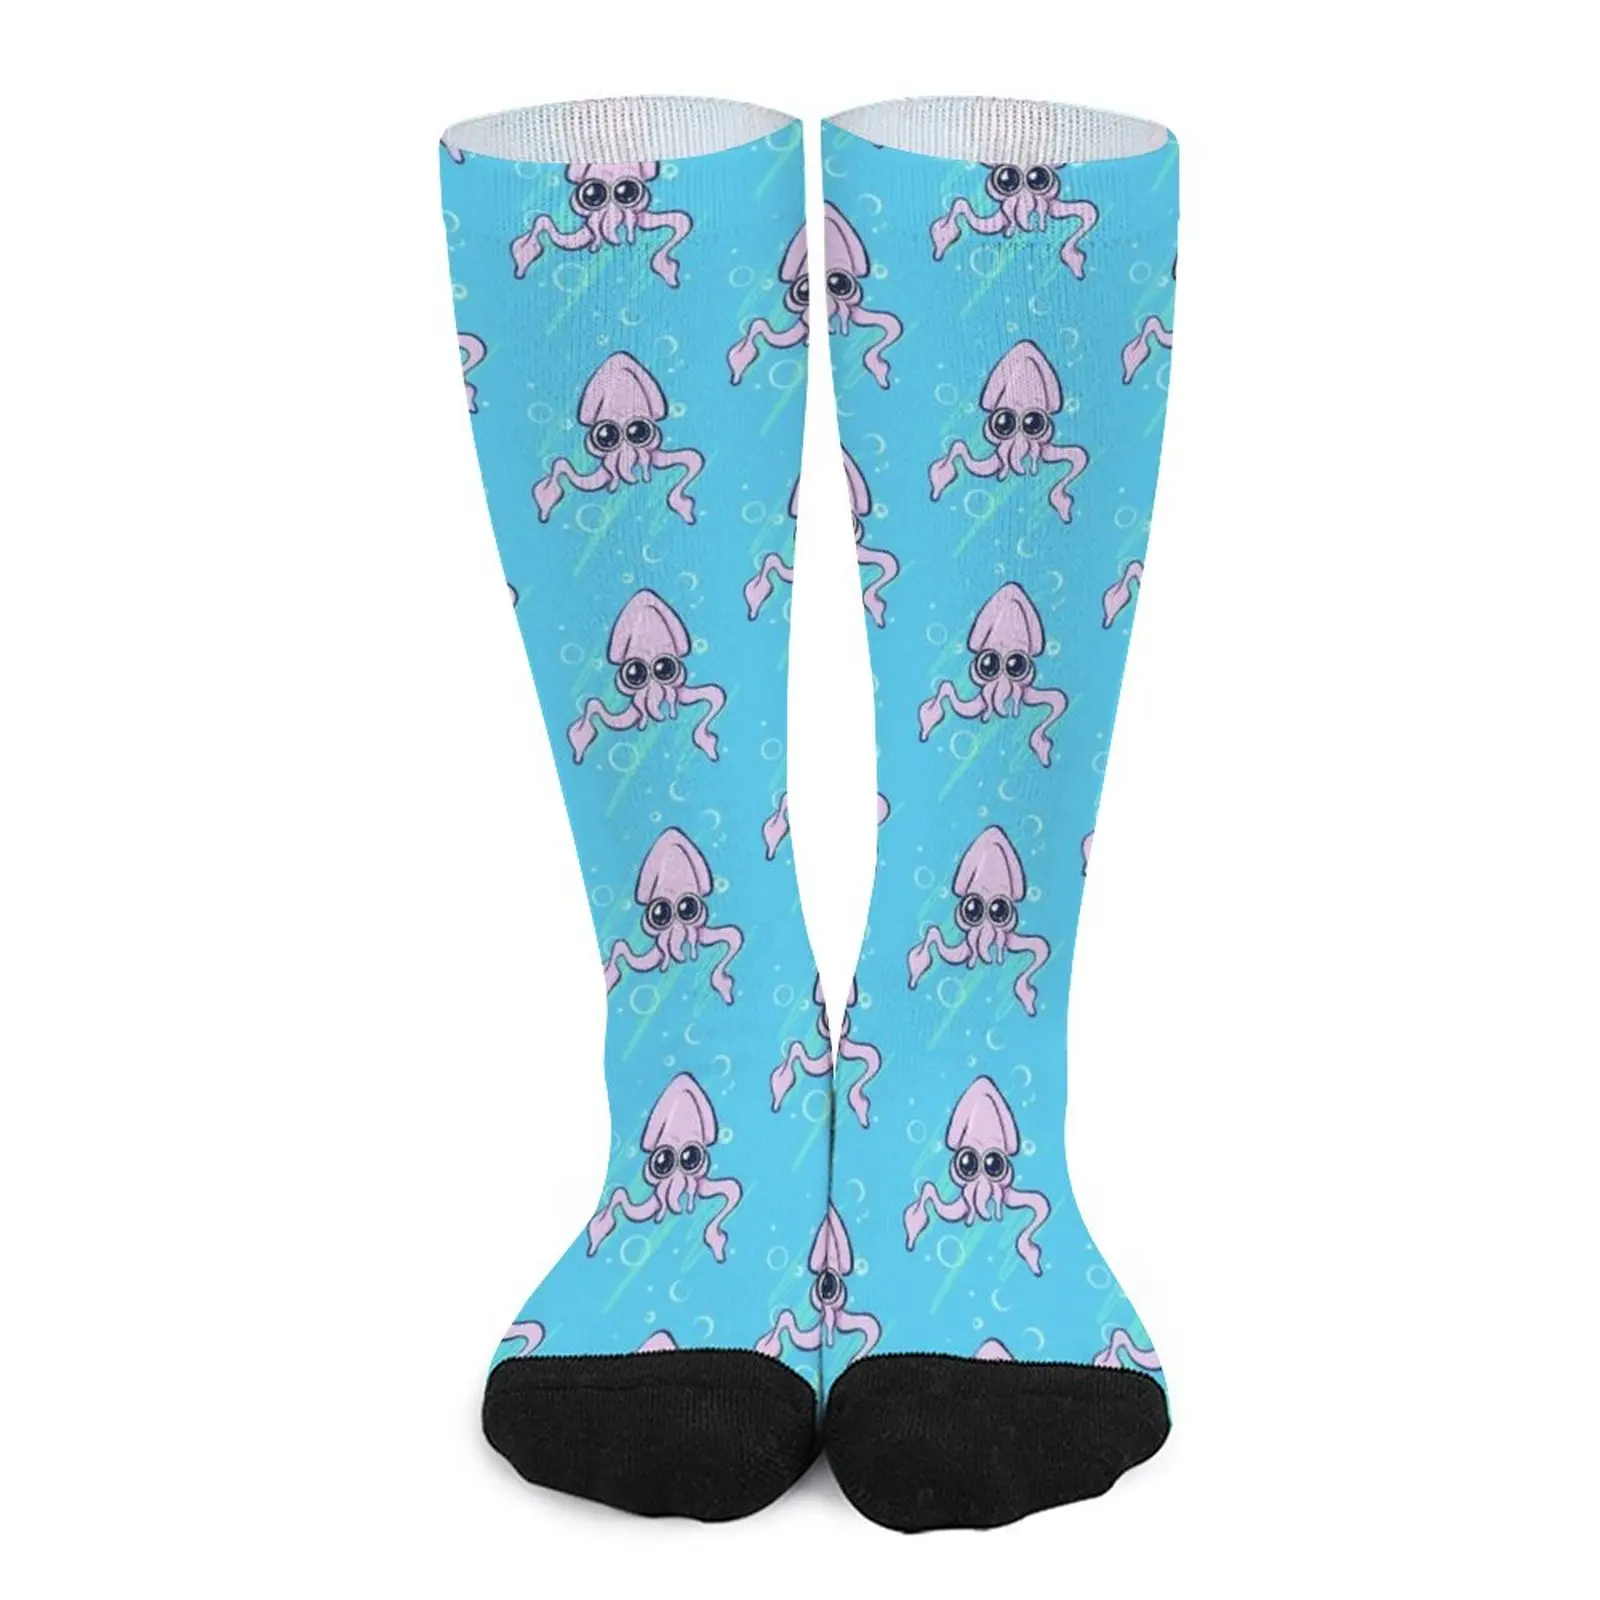 Lil Squidy Socks Funny socks Compression stockings valentines day gift for boyfriend long socks man